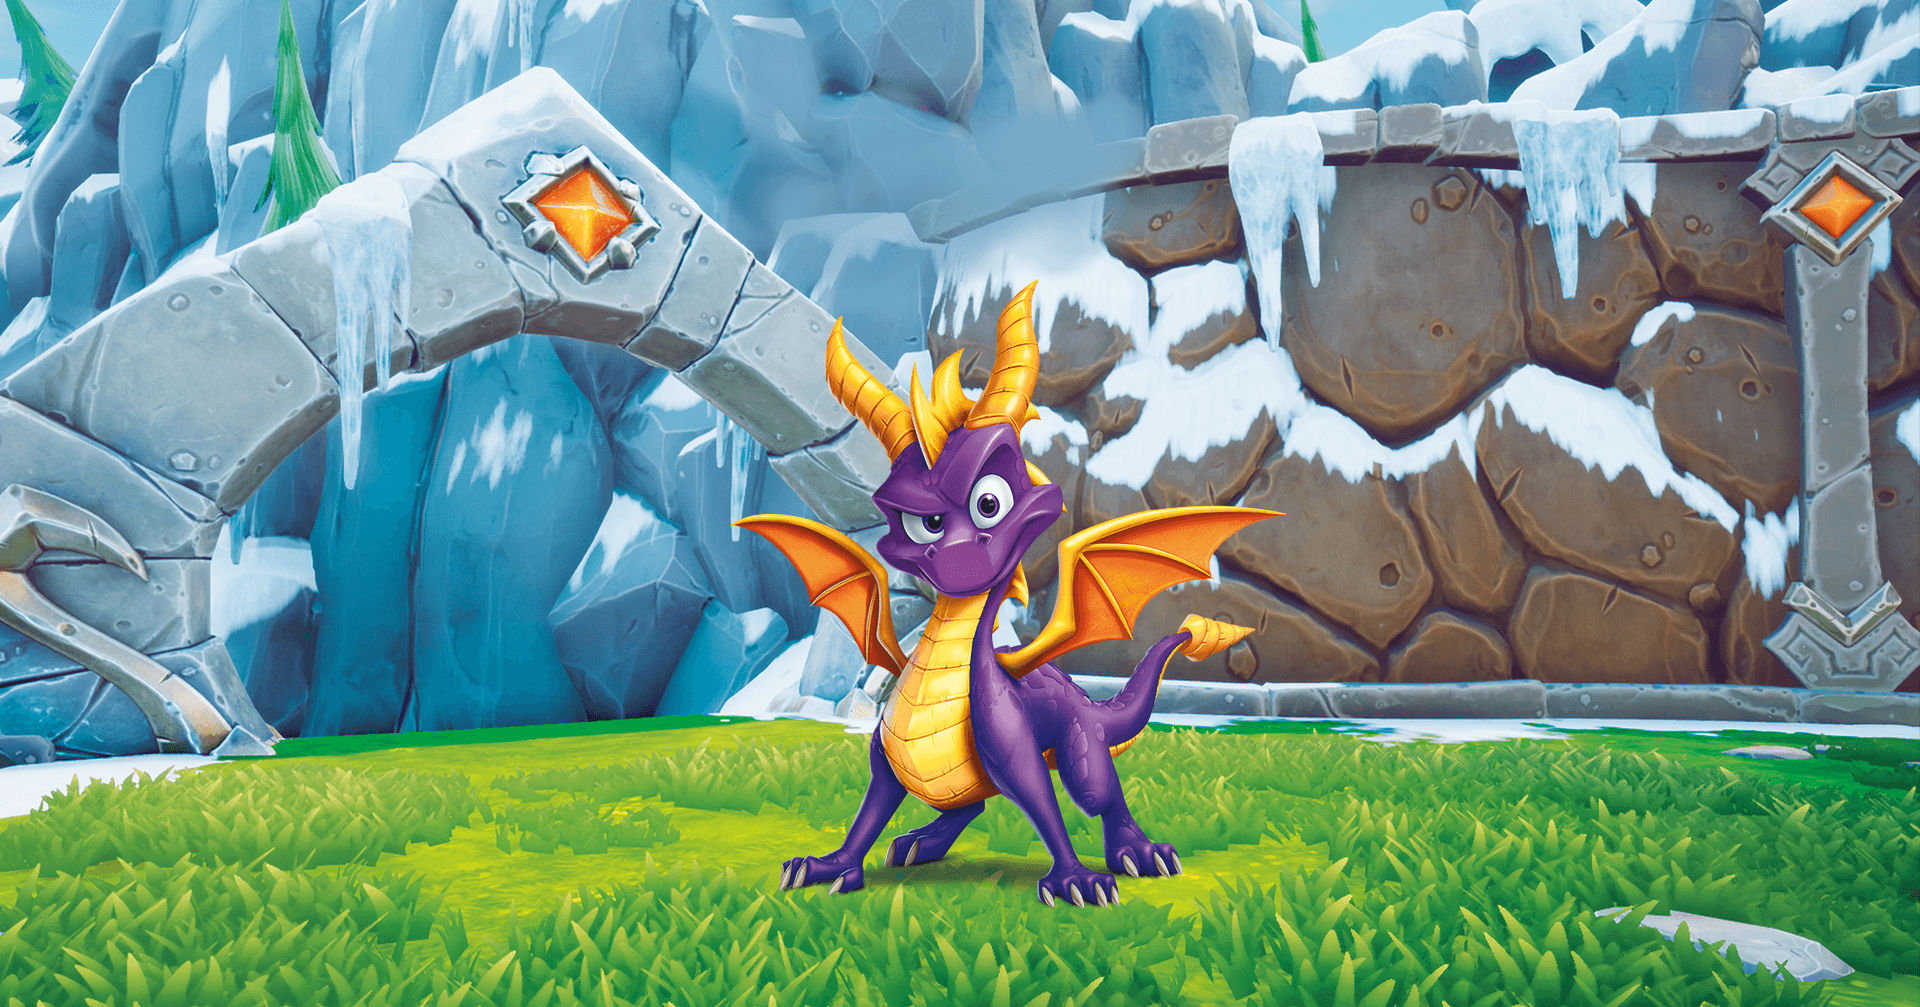 spyro the dragon mobile game download